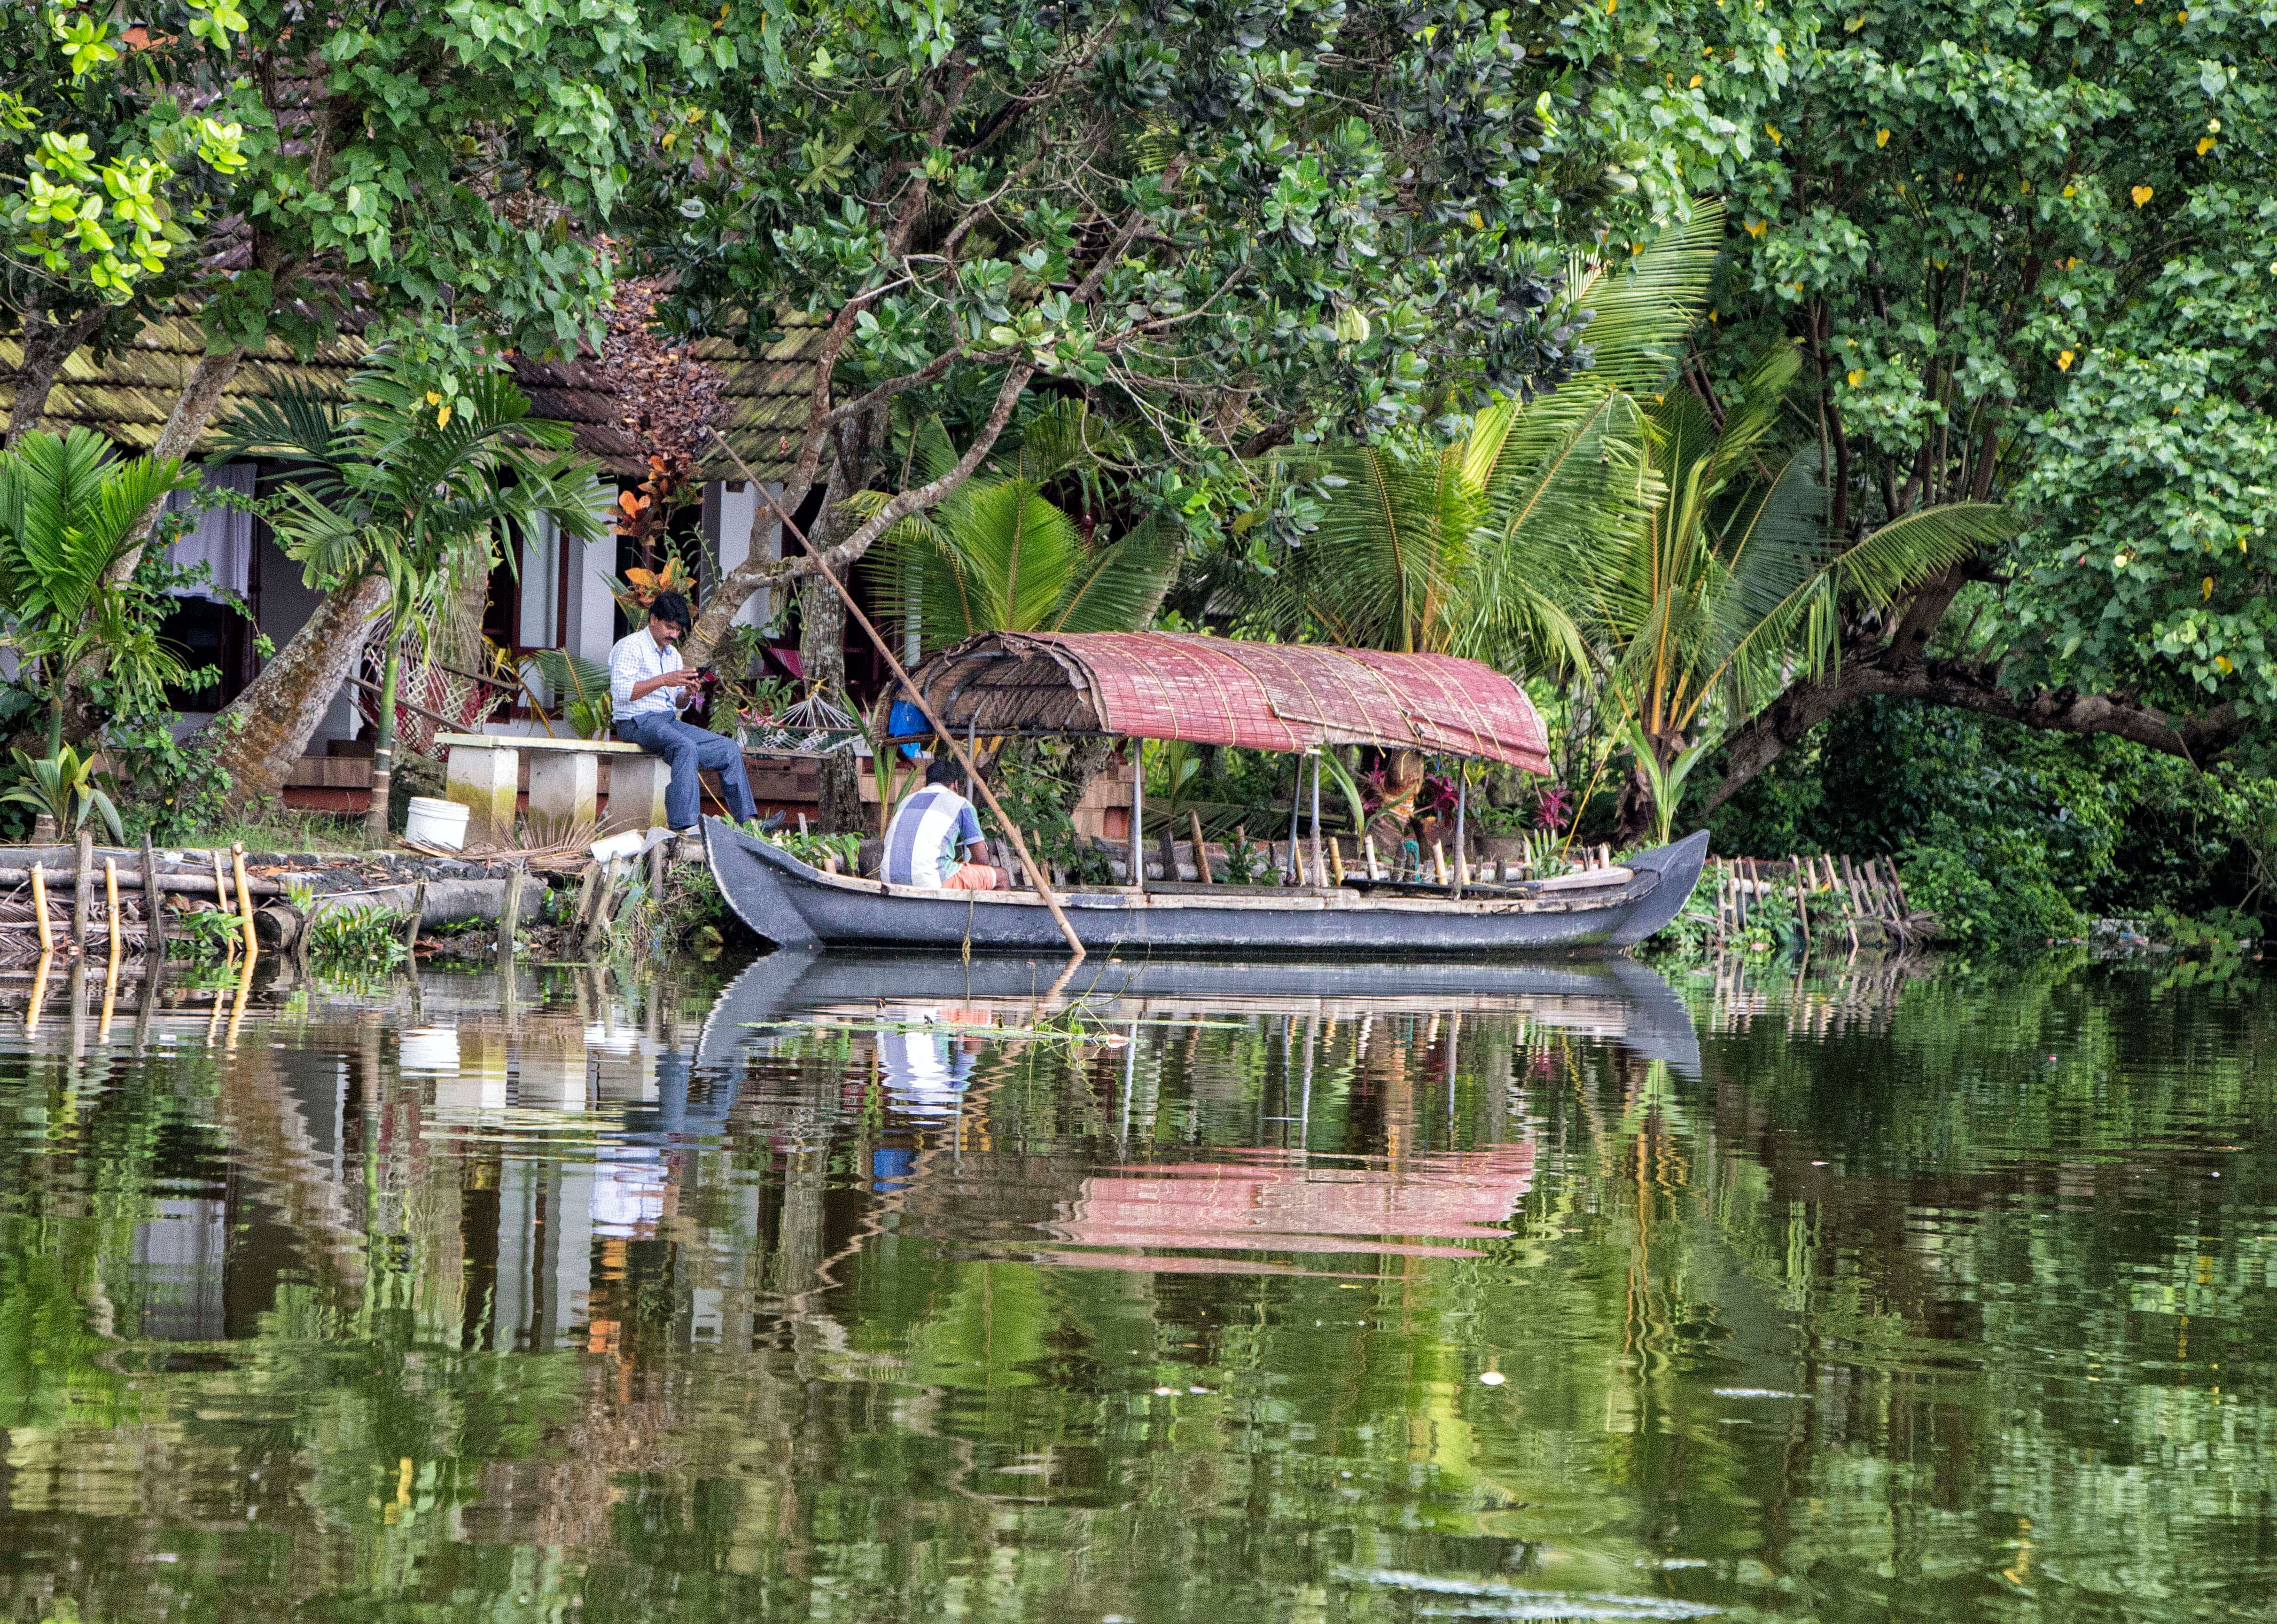 On the Kerala backwaters, India